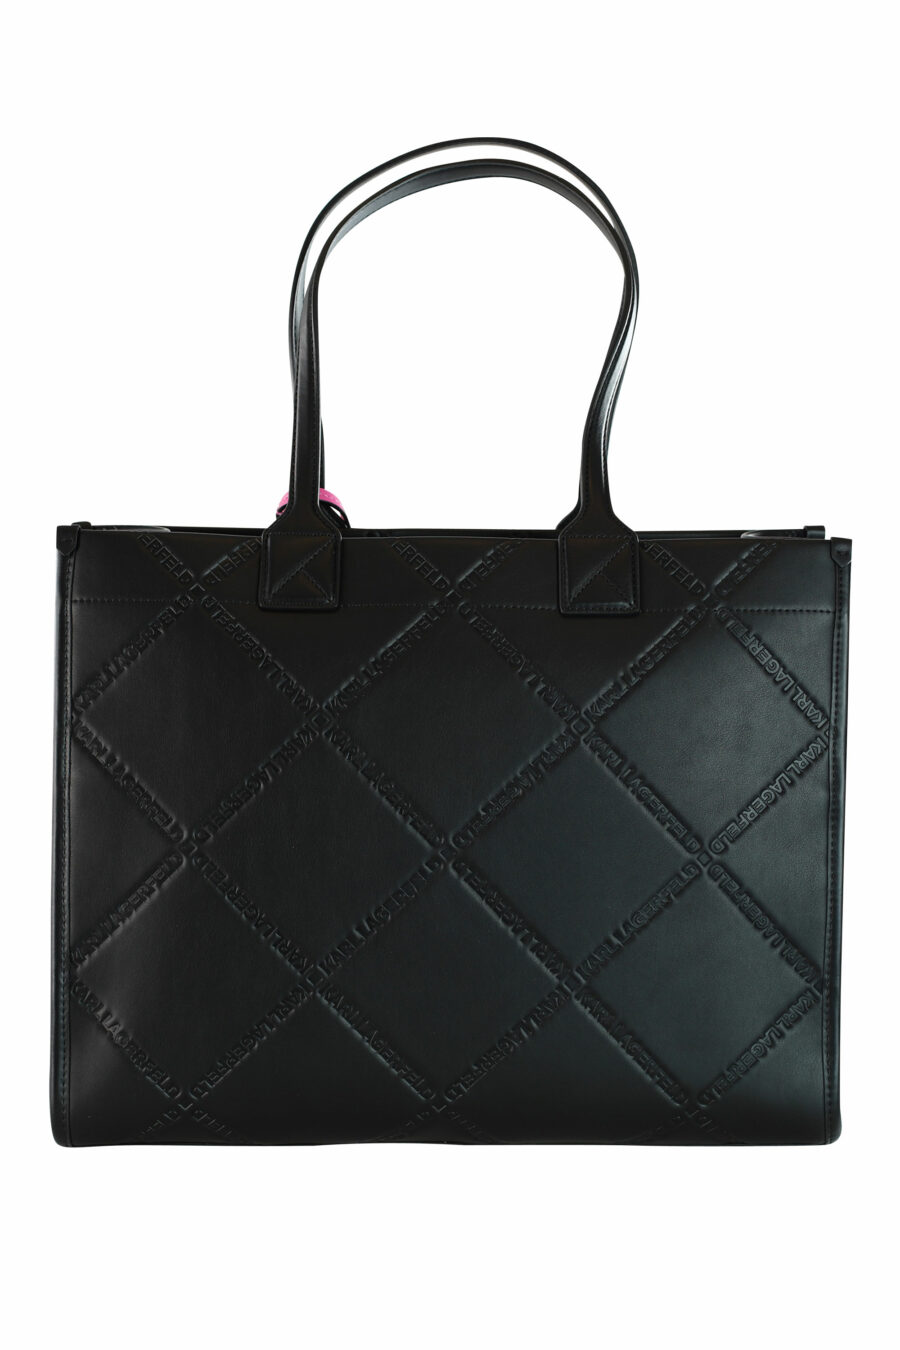 Tote bag black "k/skuare" with embossed logo - 8720744102526 3